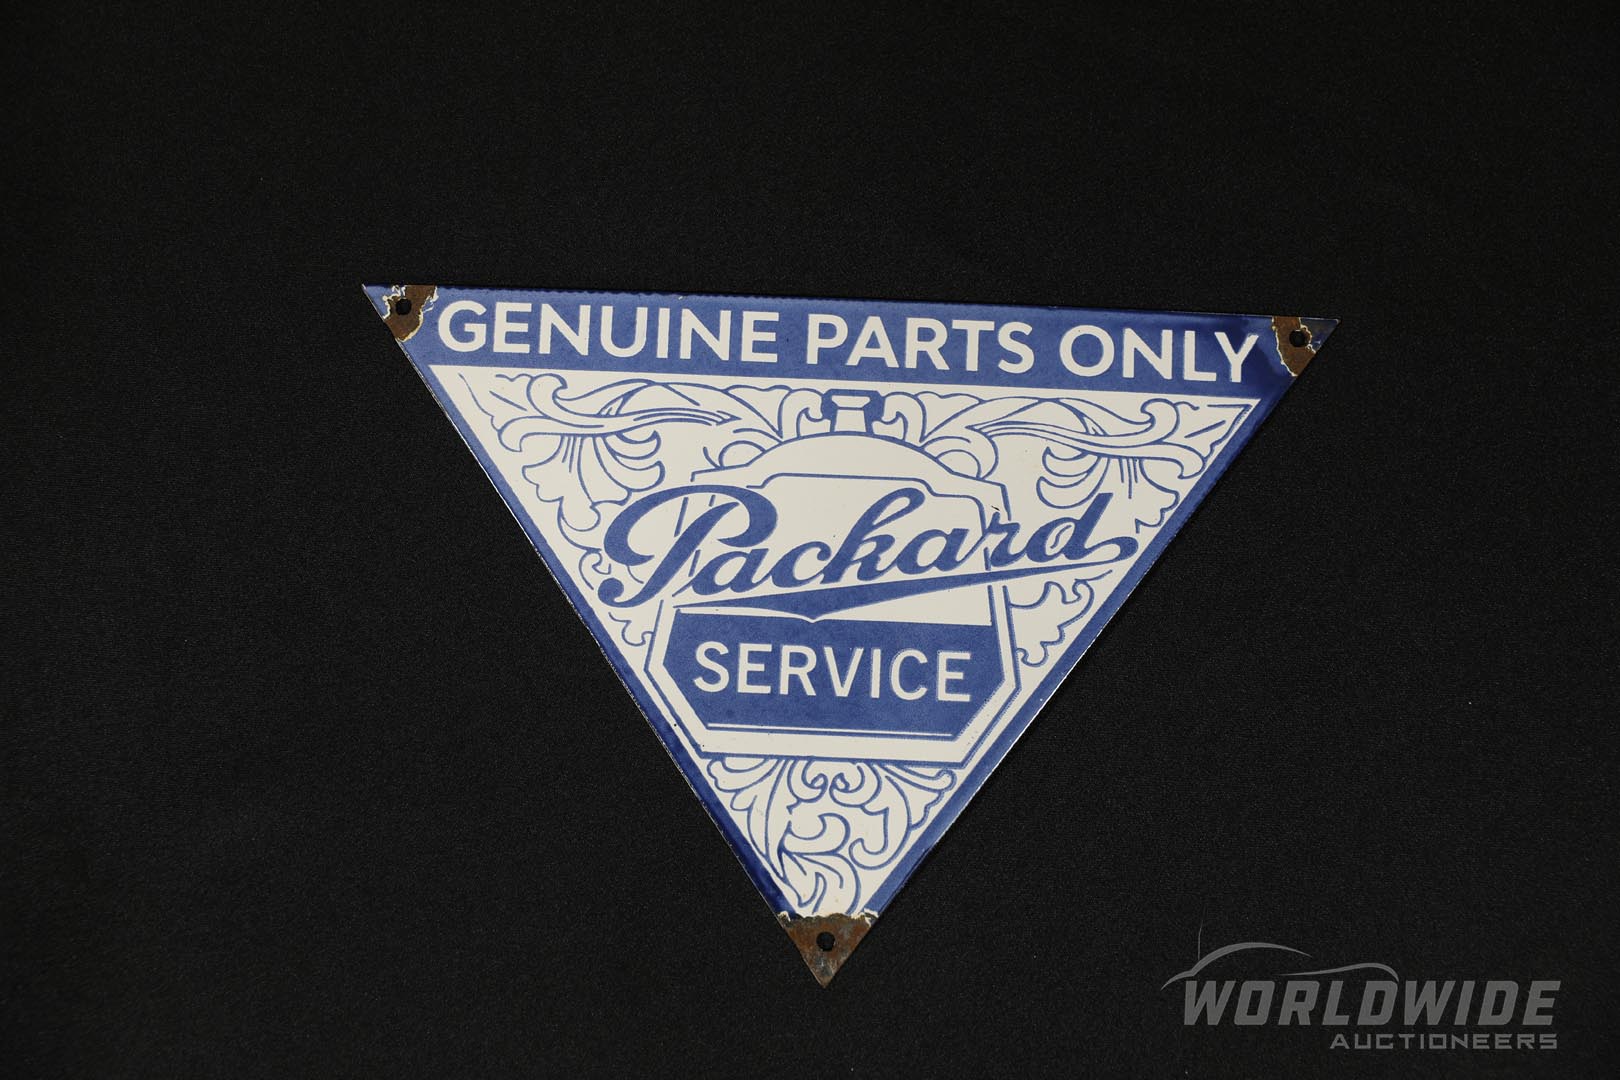 Circa 1915 Original Packard Triangle Single-Sided Porcelain Sign